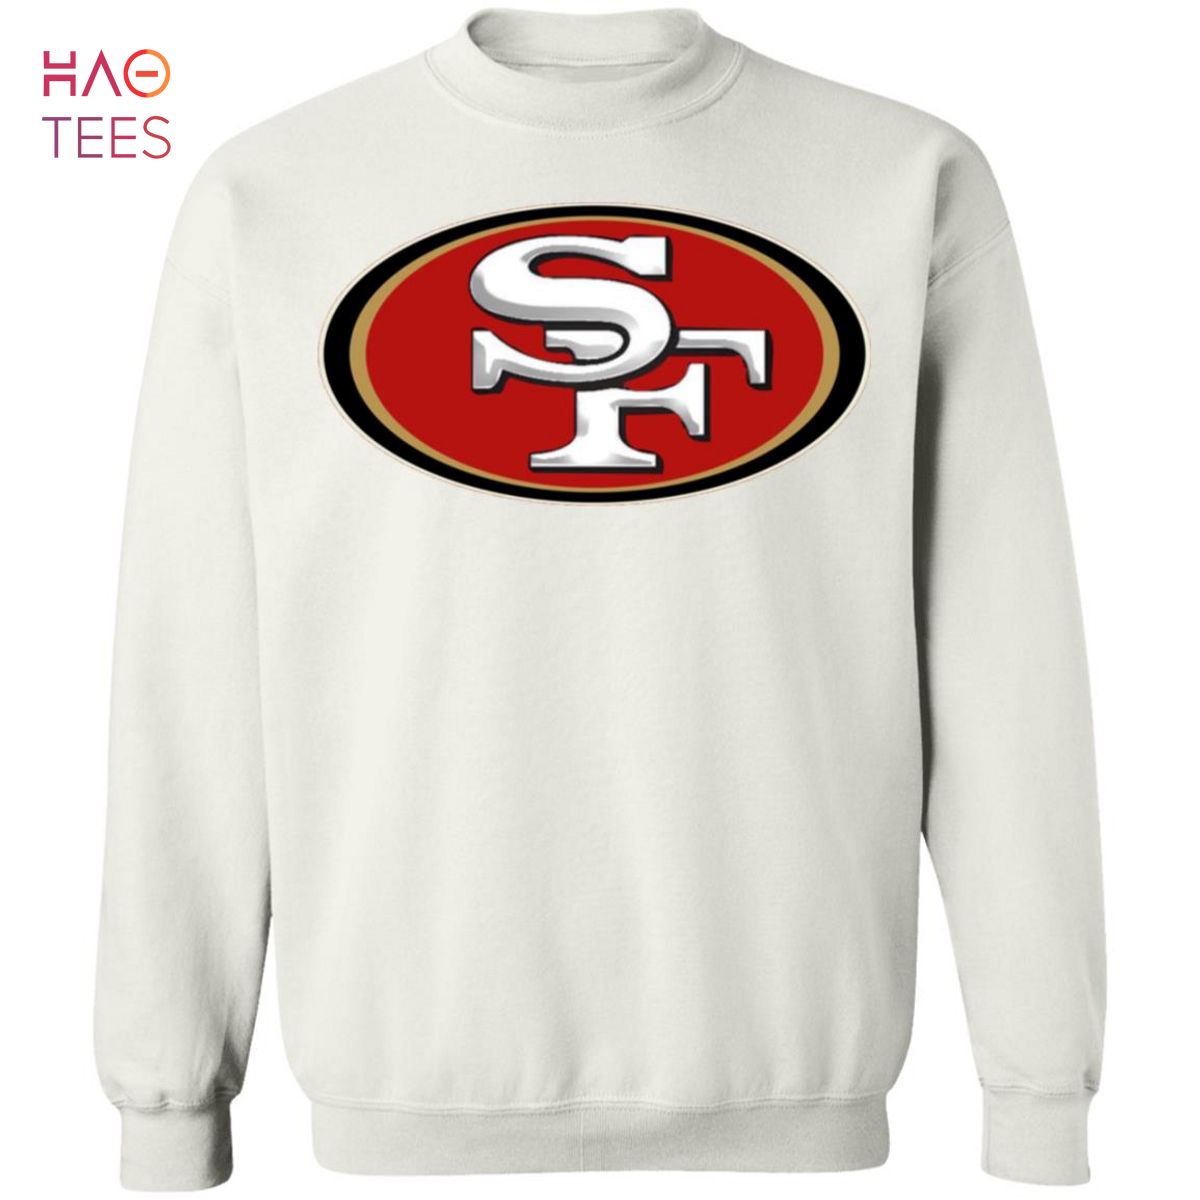 49ers sweater